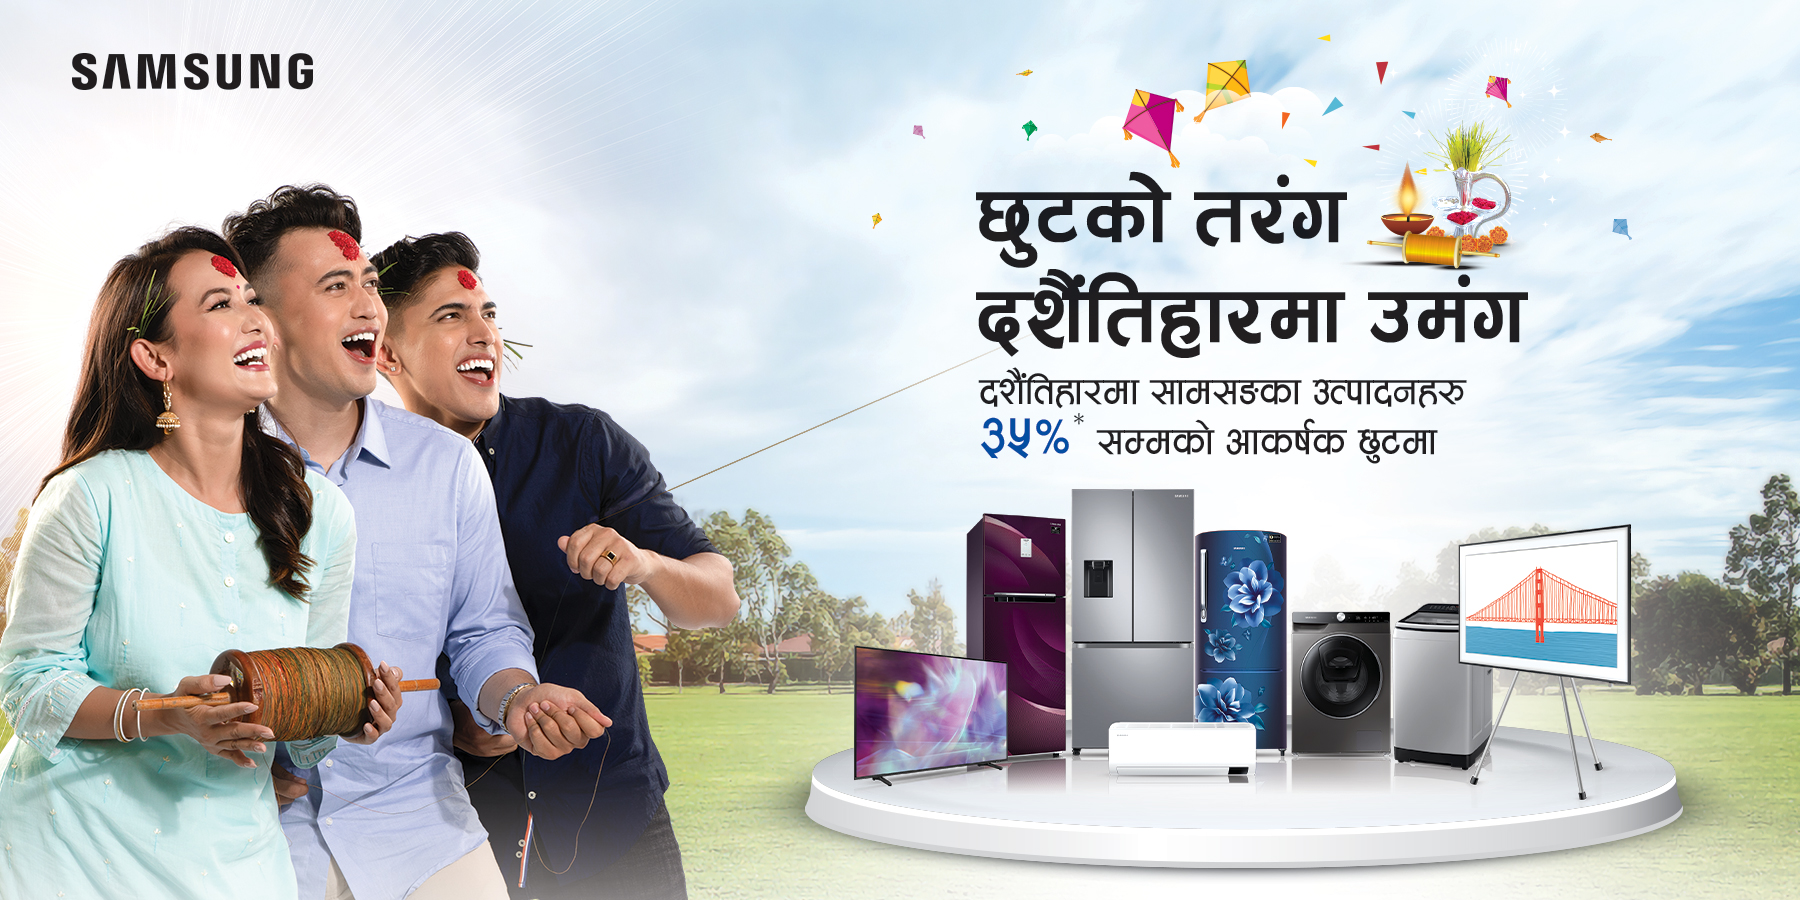 Samsung Dashain Tihar offer “Chhut ko Taranga, Dashain Tihar ma Umanga”